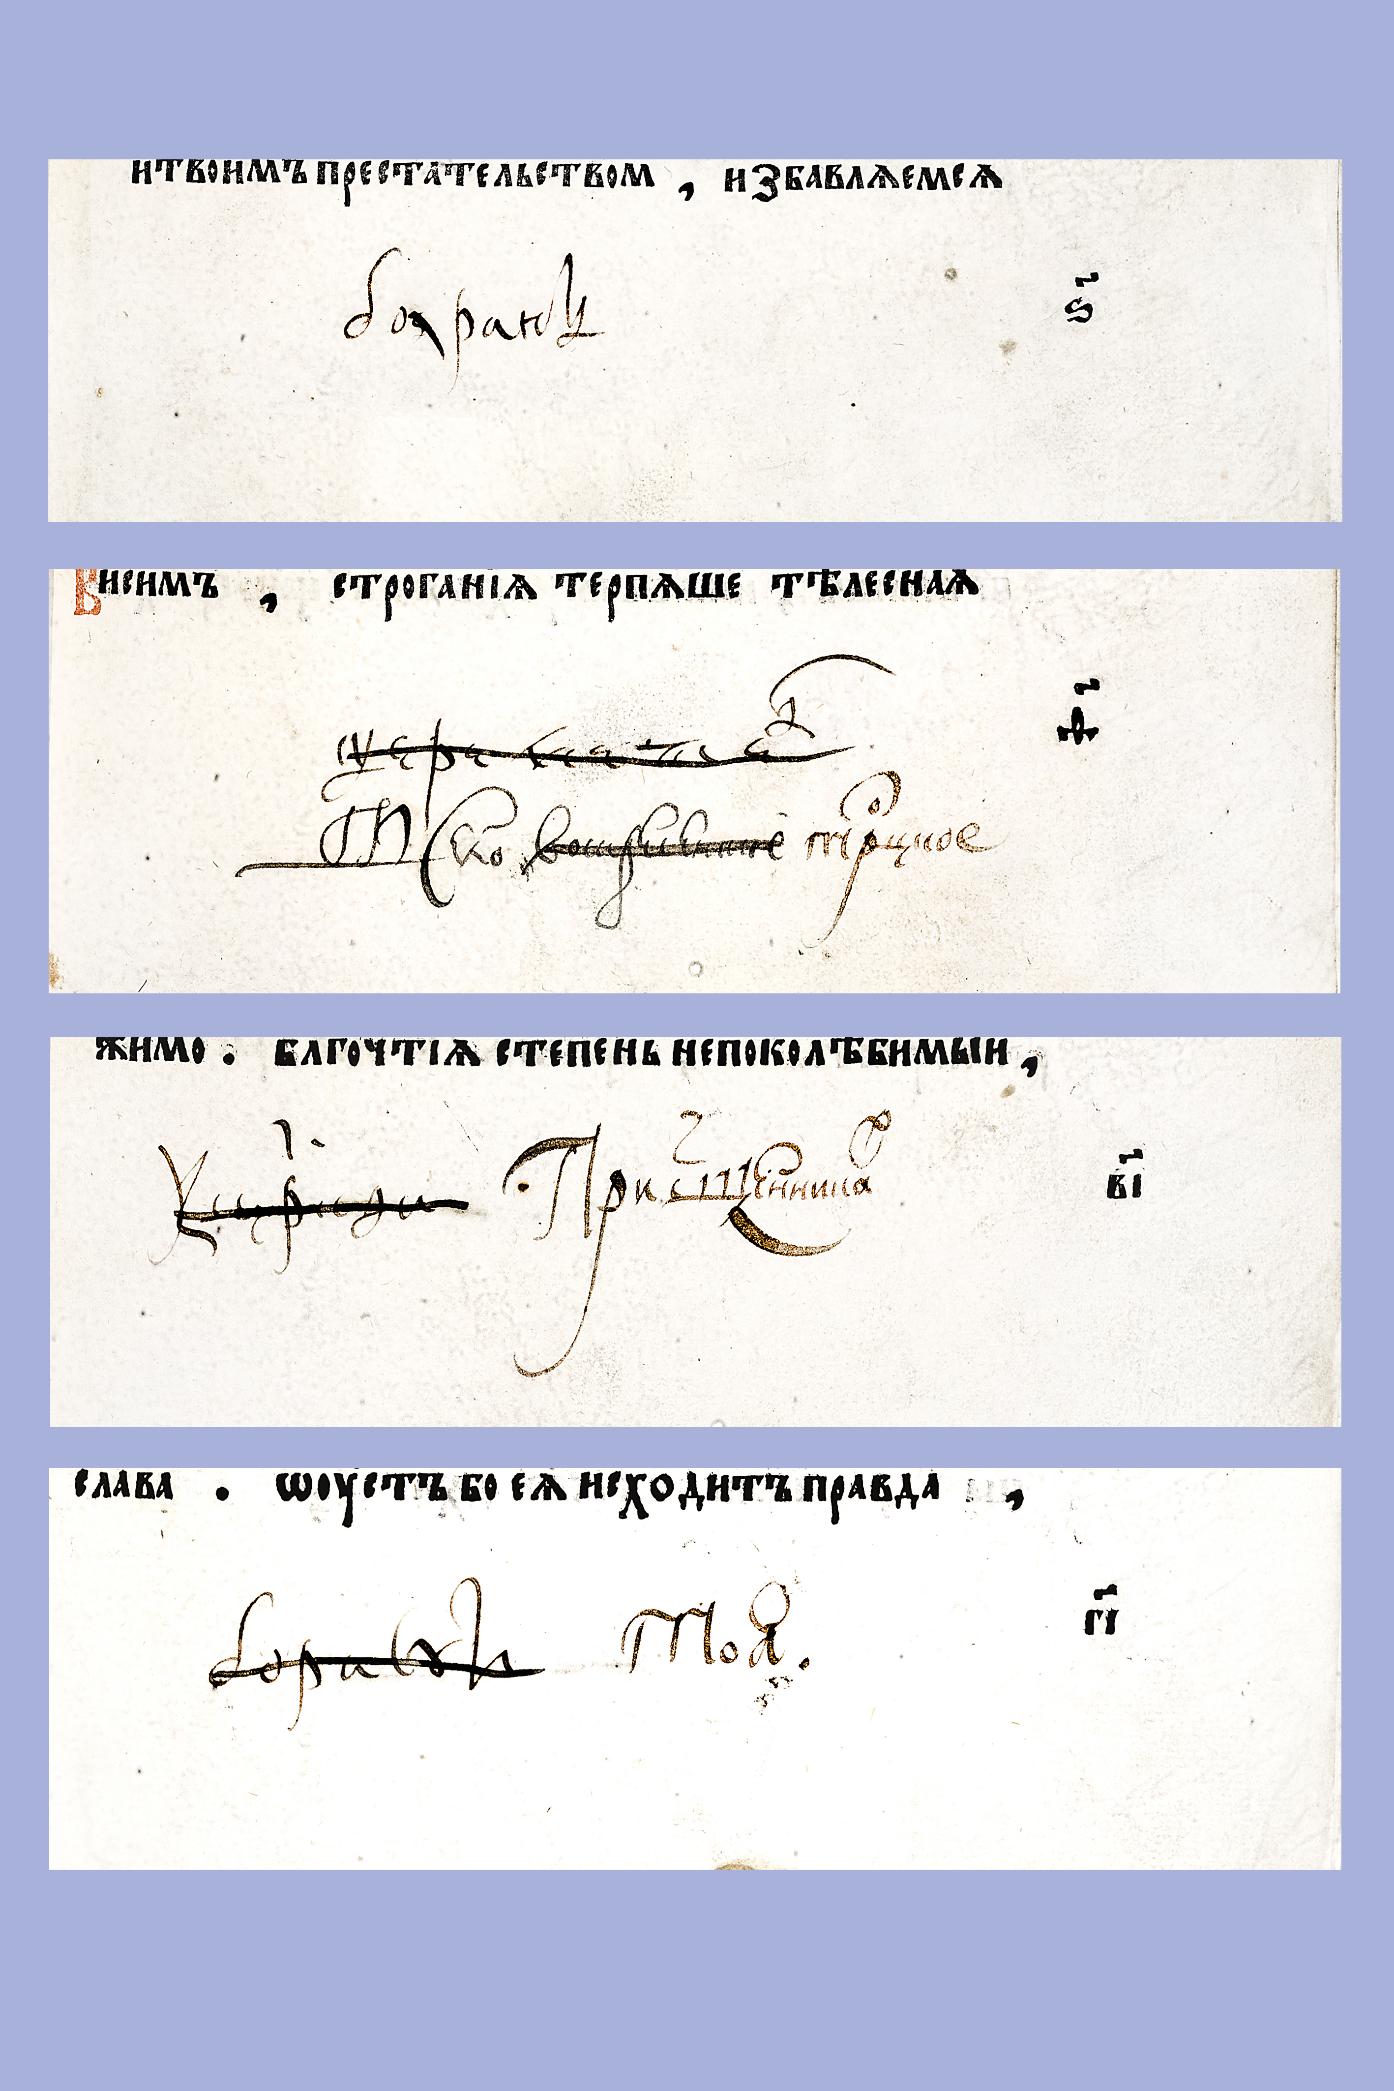 1.VIII. Фрагмент вкладной записи 1648/1649 г. боярина Шереметева (л. 6, 9, 12, 13)